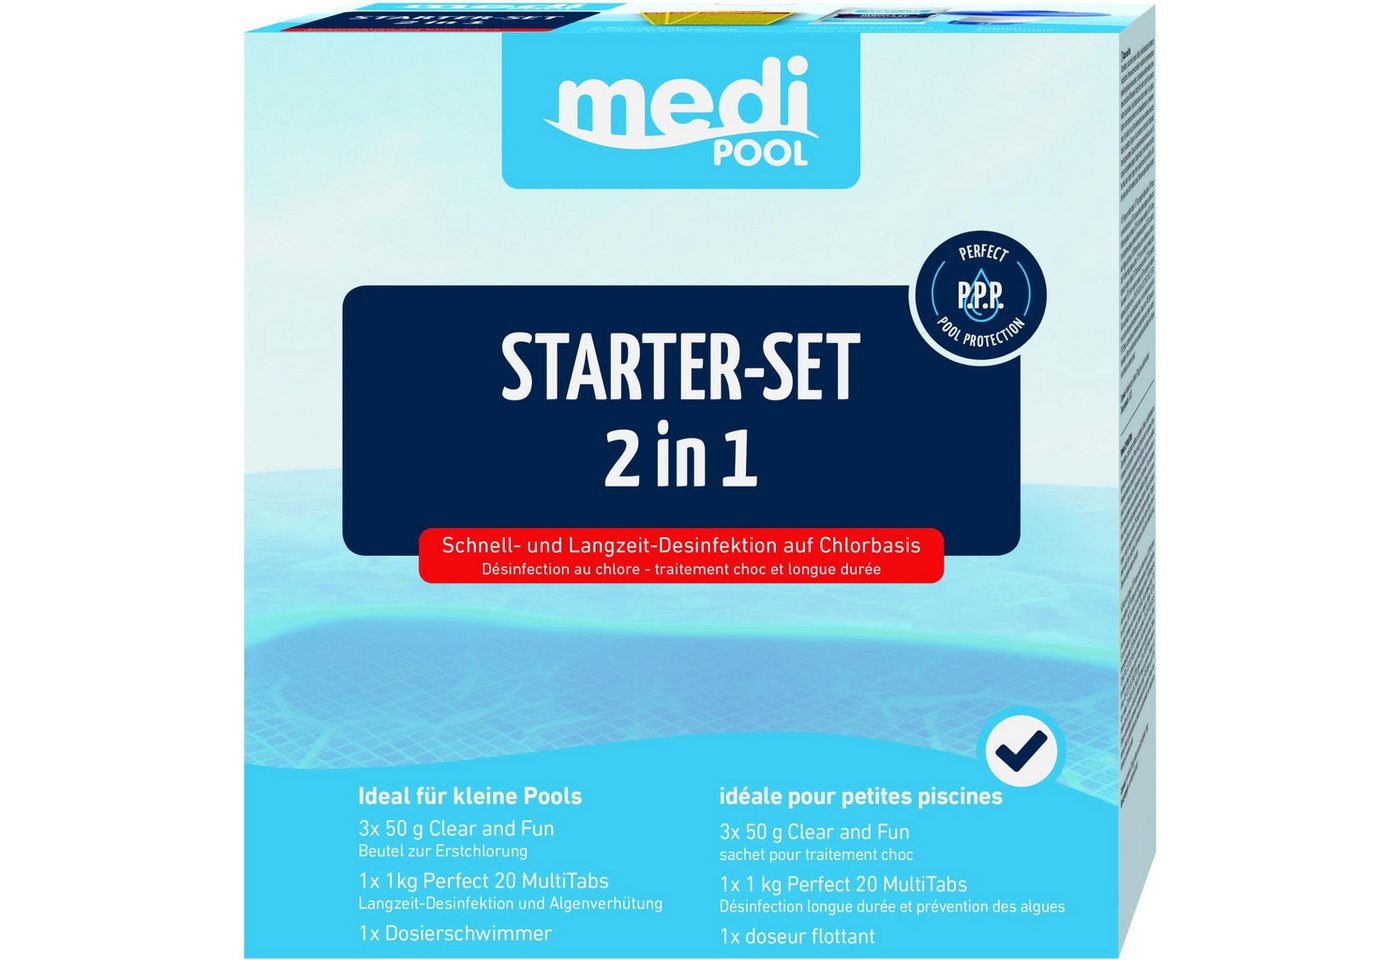 mediPOOL Poolpflege mediPOOL - Starter Set 2in1: Perfect 20 MultiTabs von mediPOOL